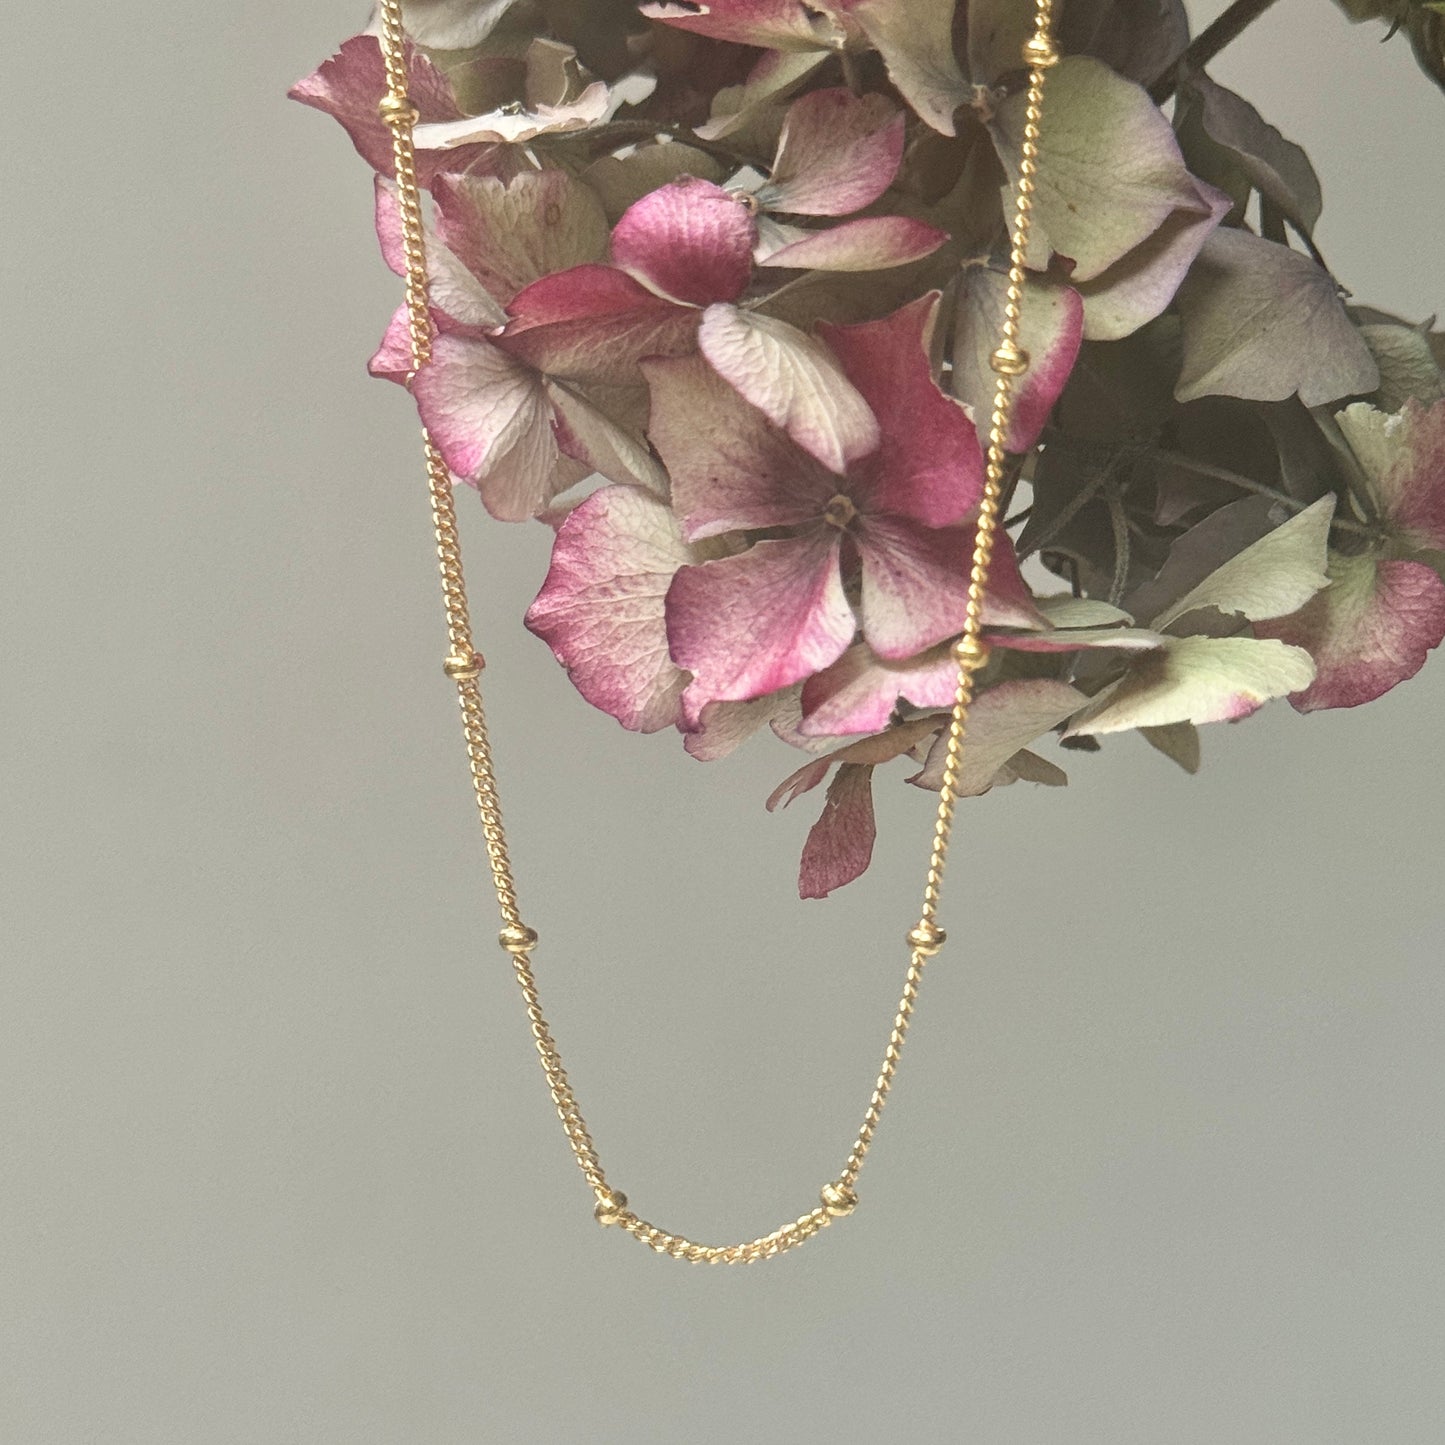 Olive Green Peridot (Midi Bead) Double Pendant Necklace